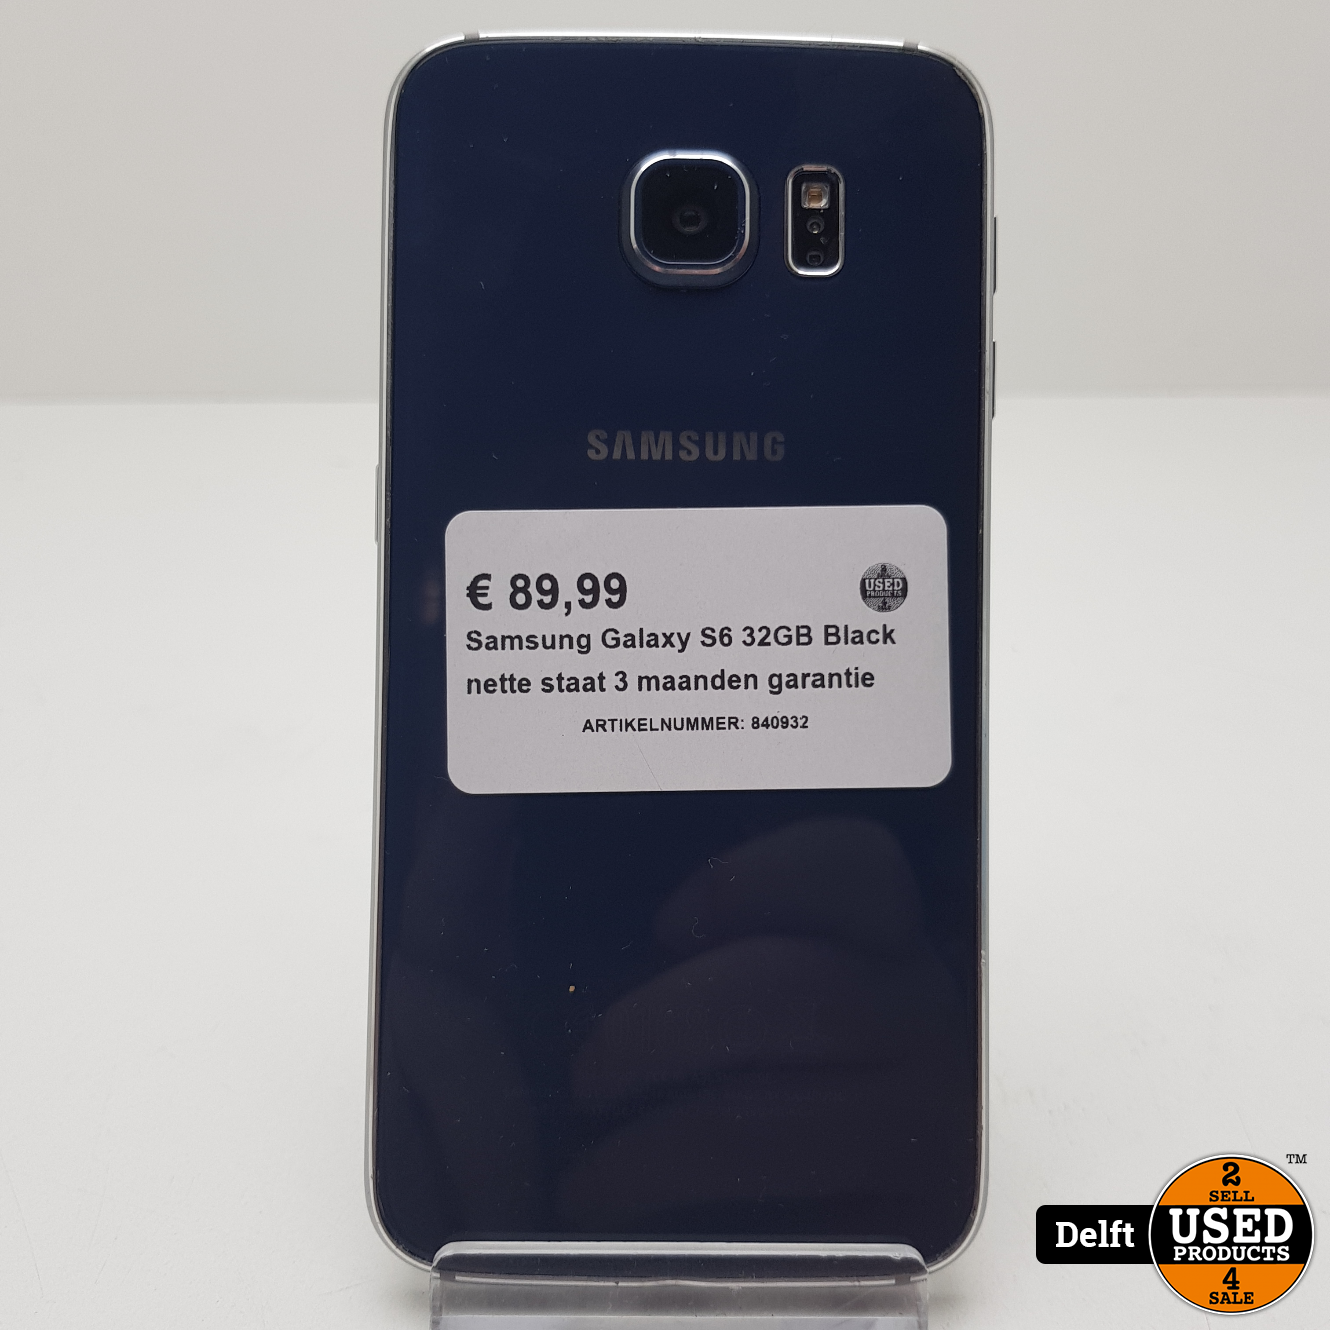 Samsung Galaxy S6 32GB Black nette staat 3 - Delft